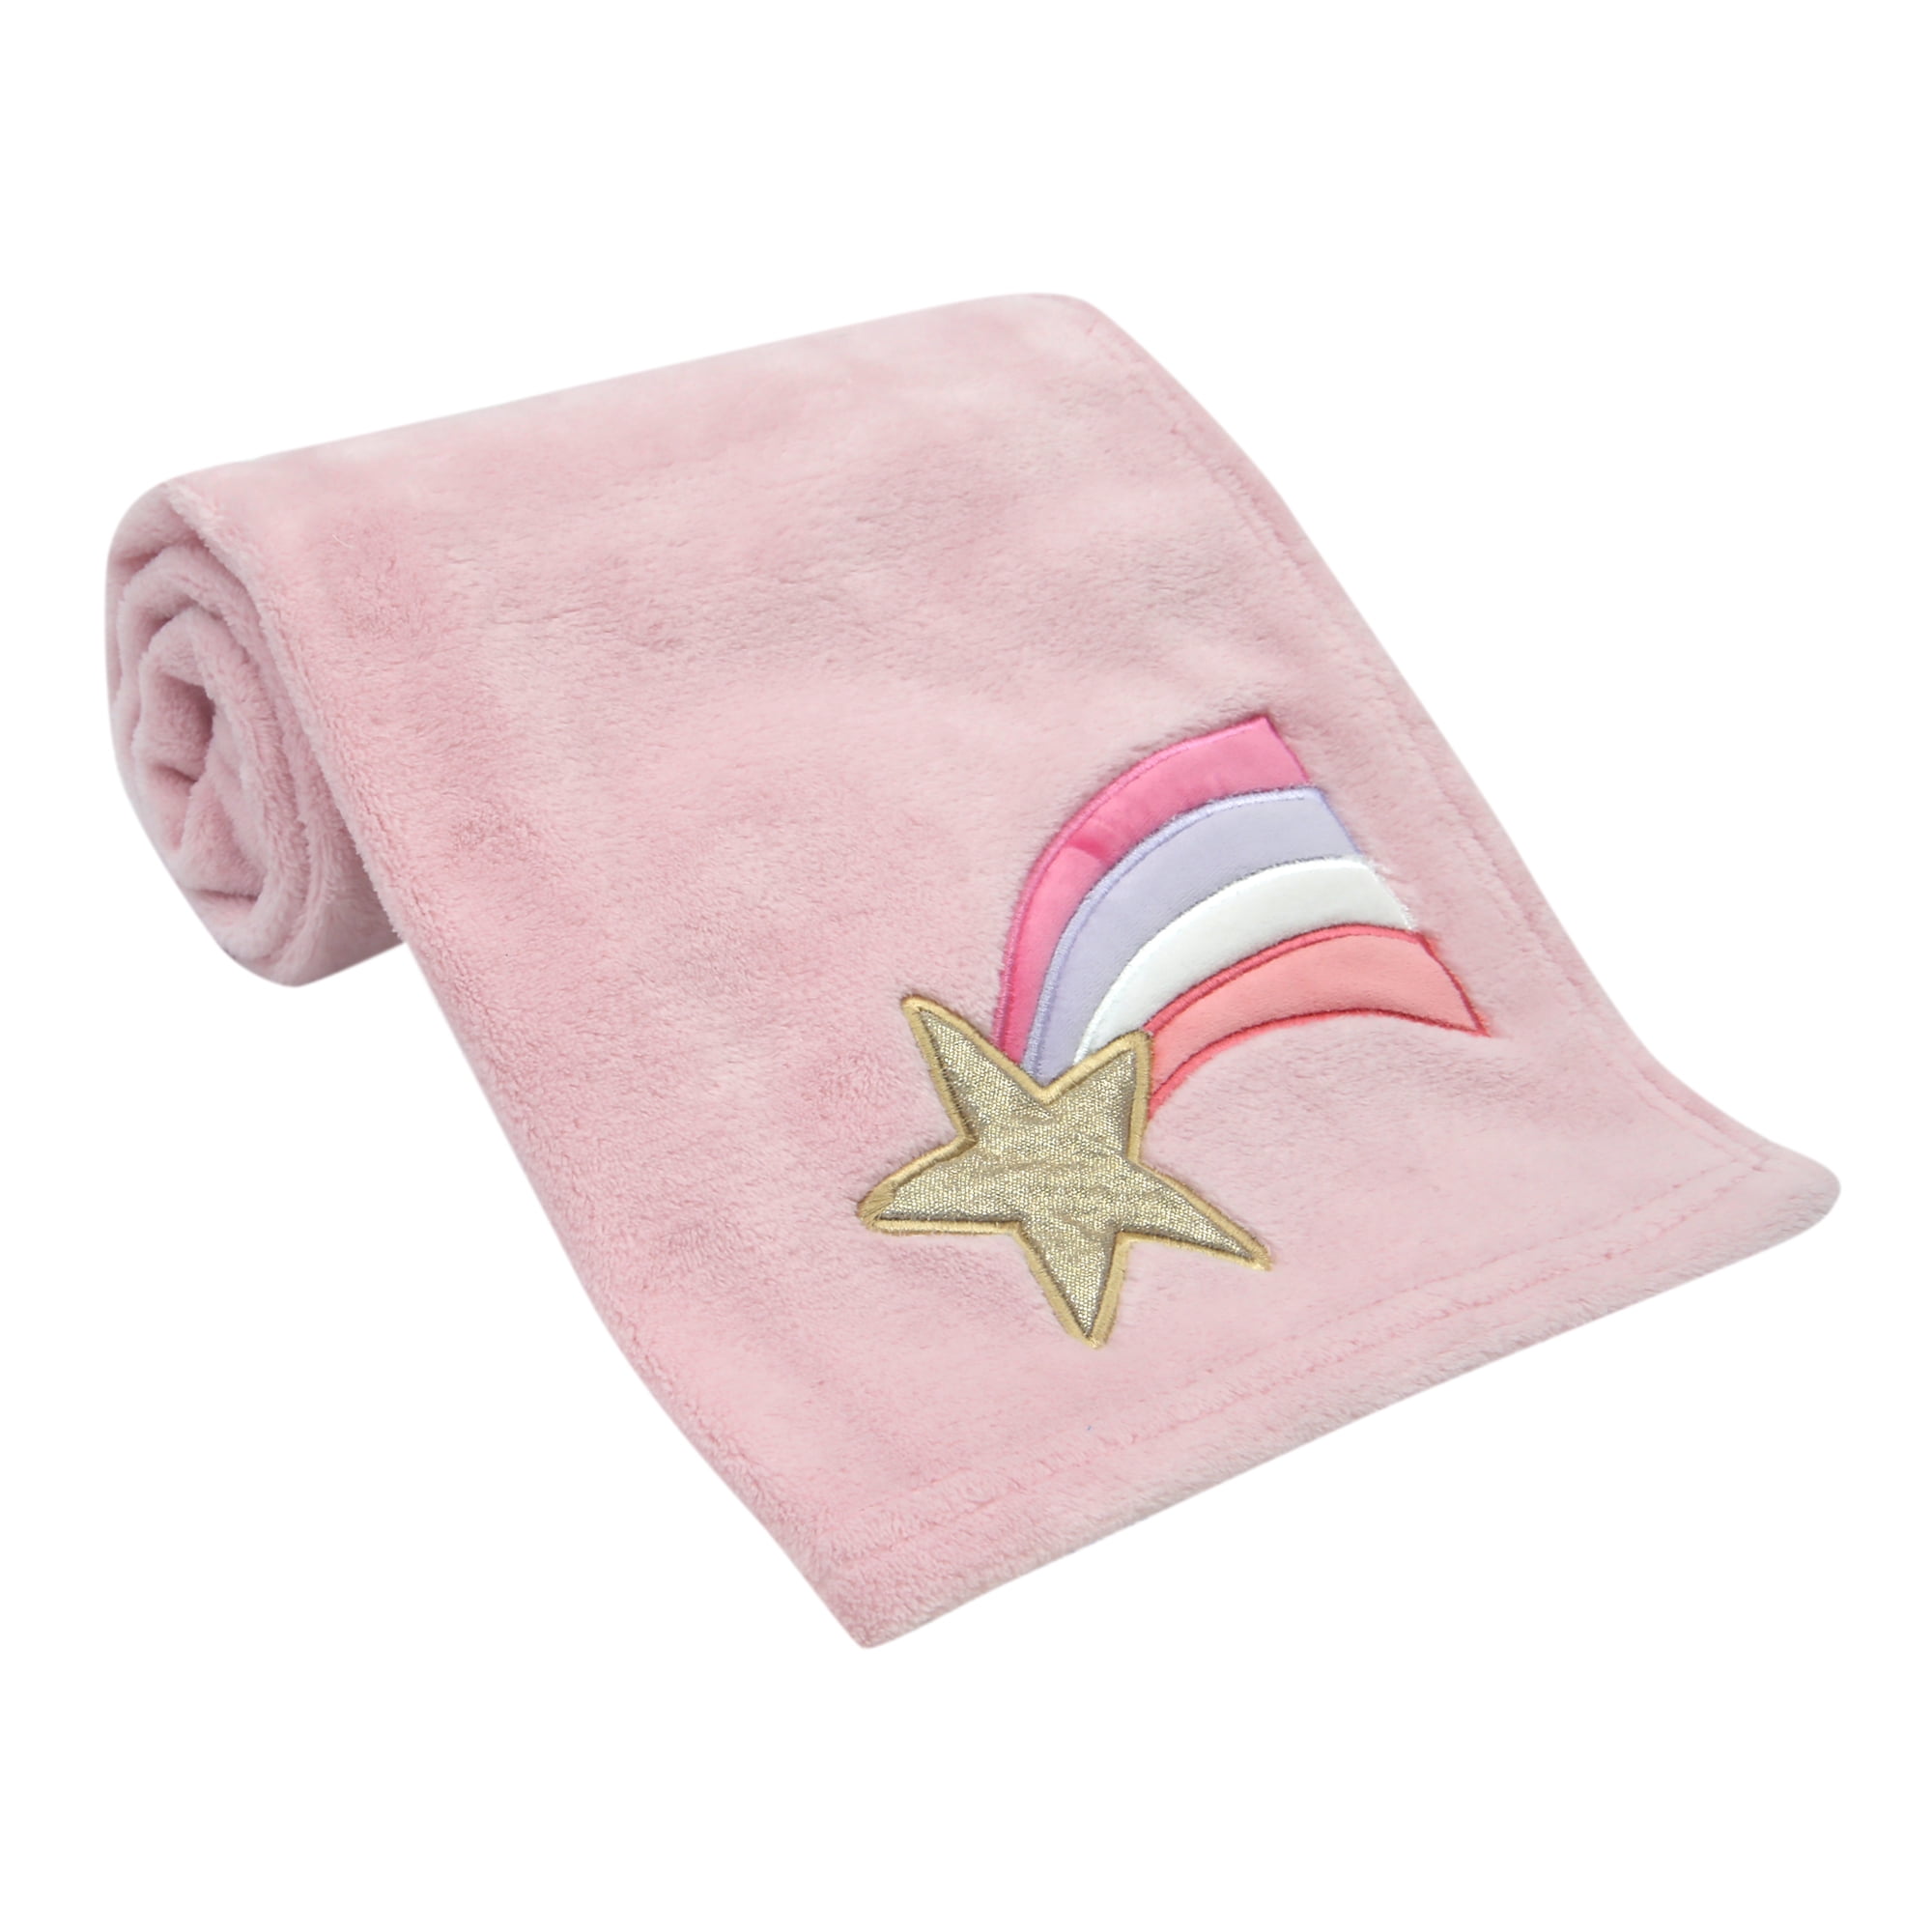 Rainbow Pink Baby Blanket